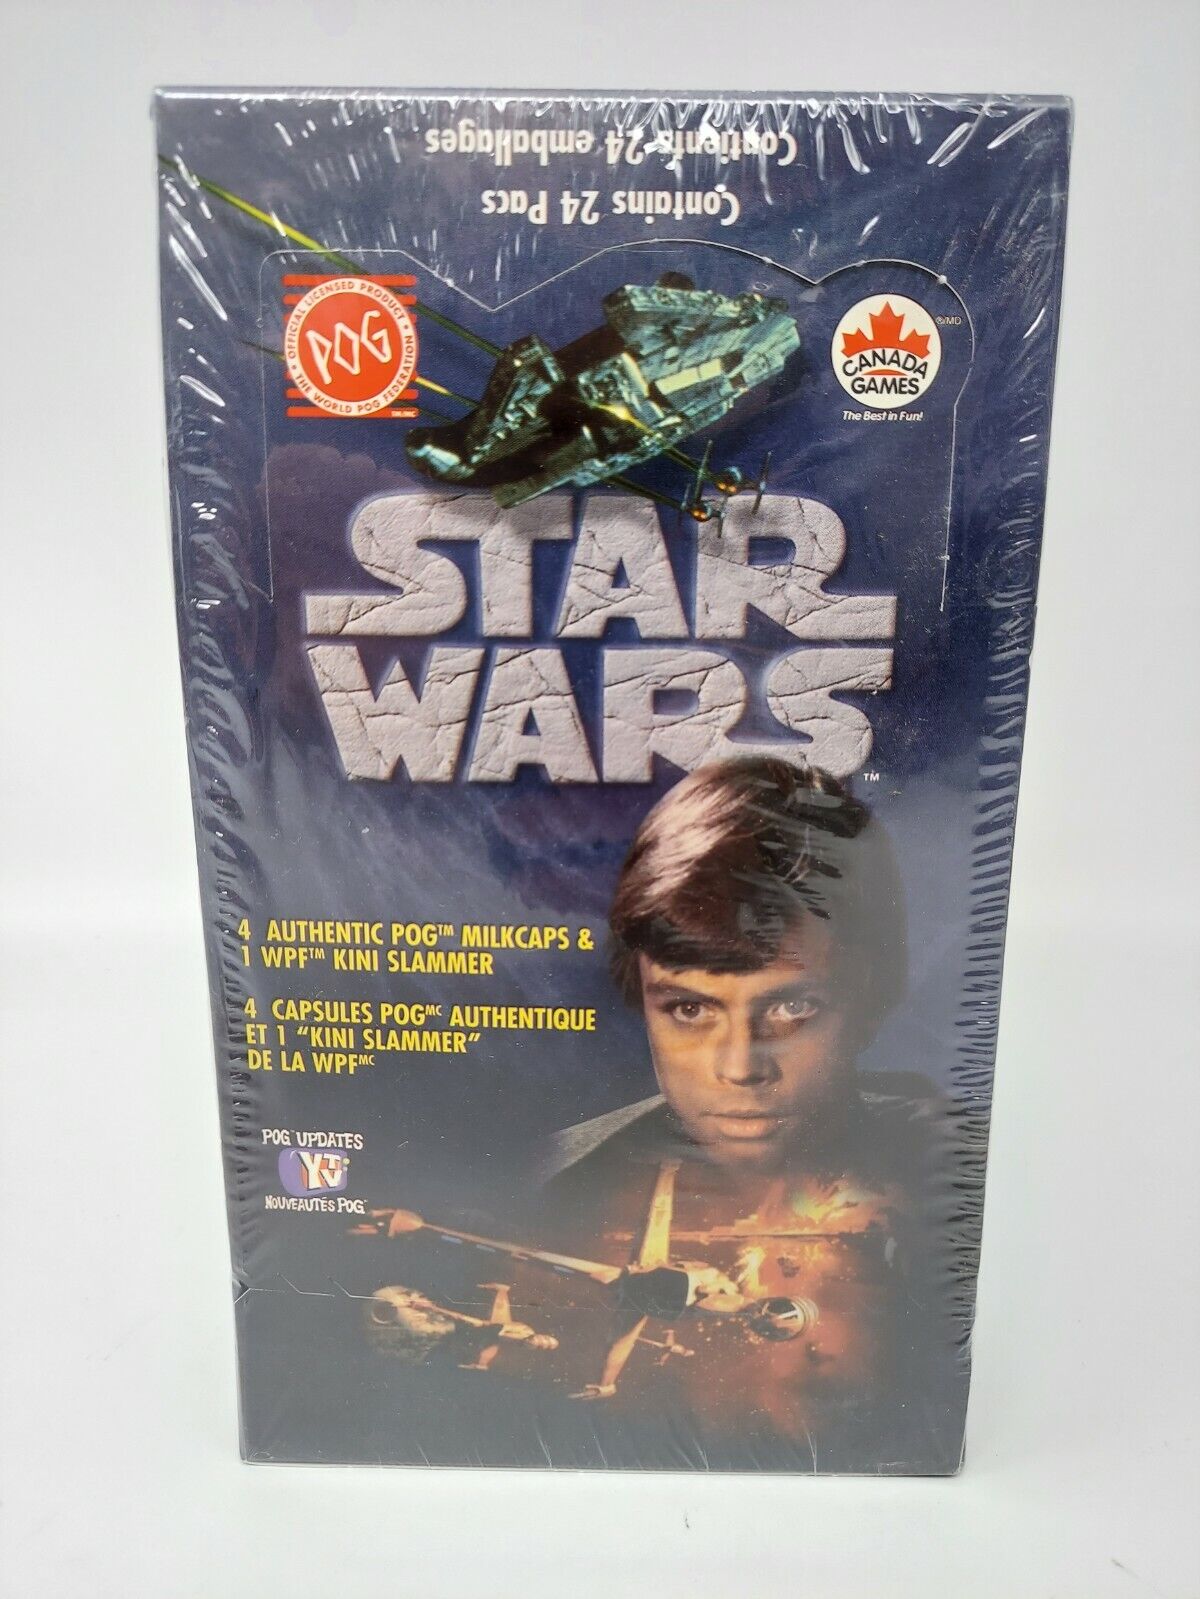 Rare Star Wars 1995 Canada Games Pogs Full Box (24 Packs) - Factory Sealed